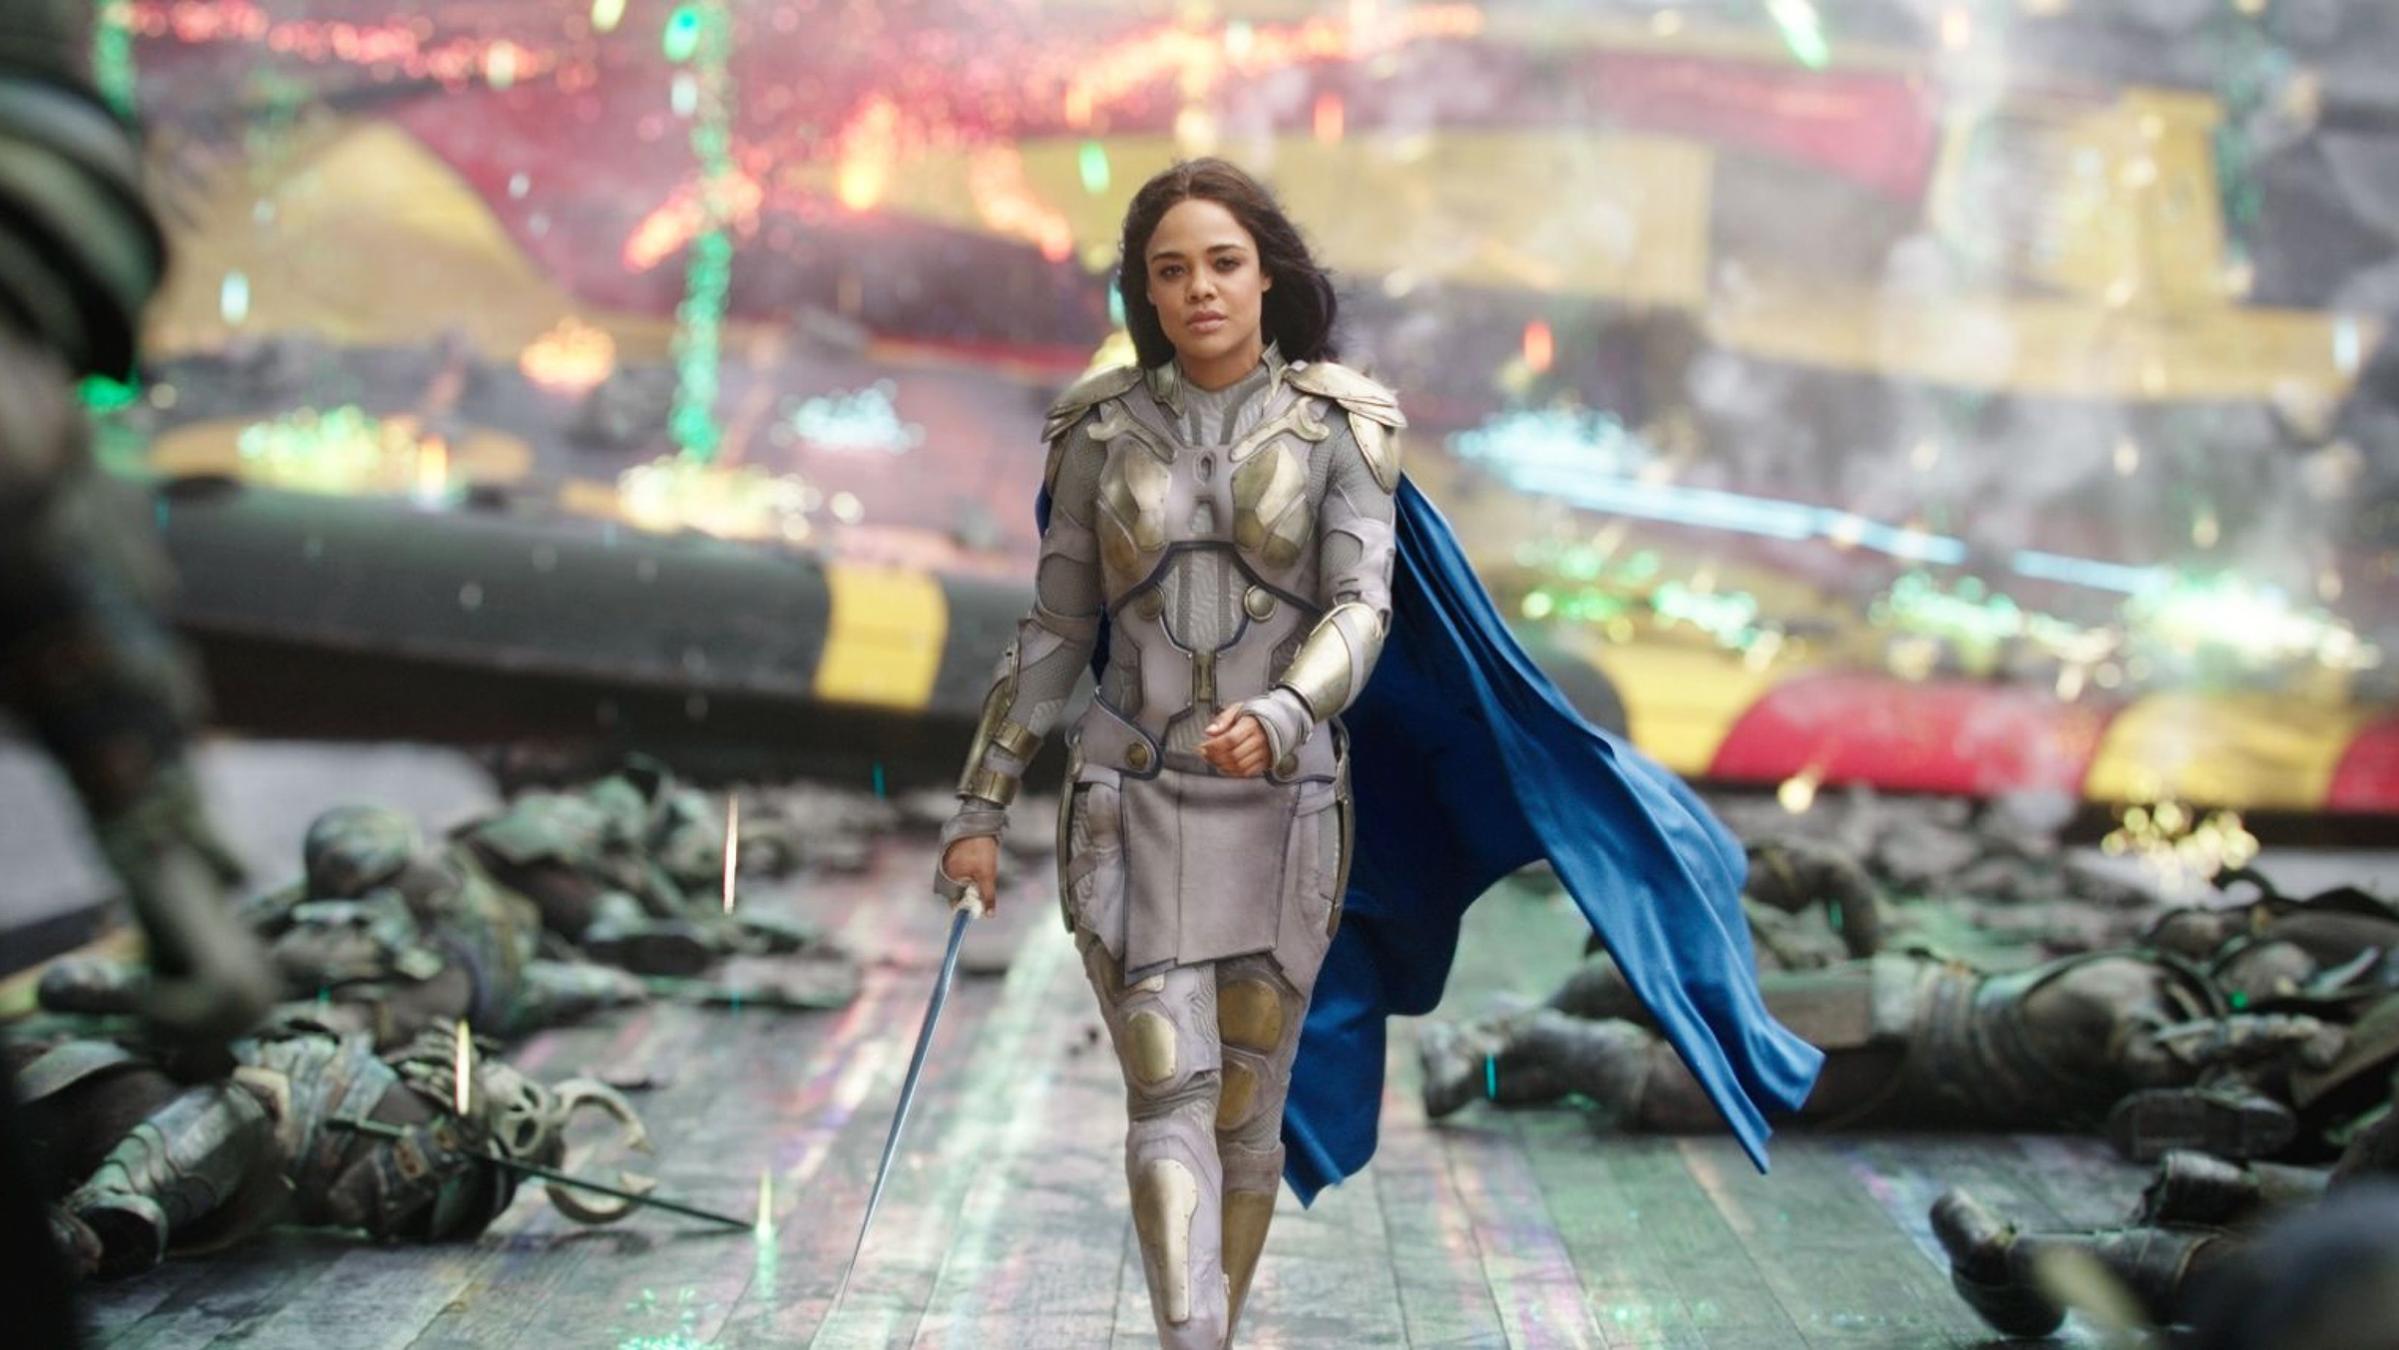 Tessa Thompson as Valkery in "Thor: Ragnarok"